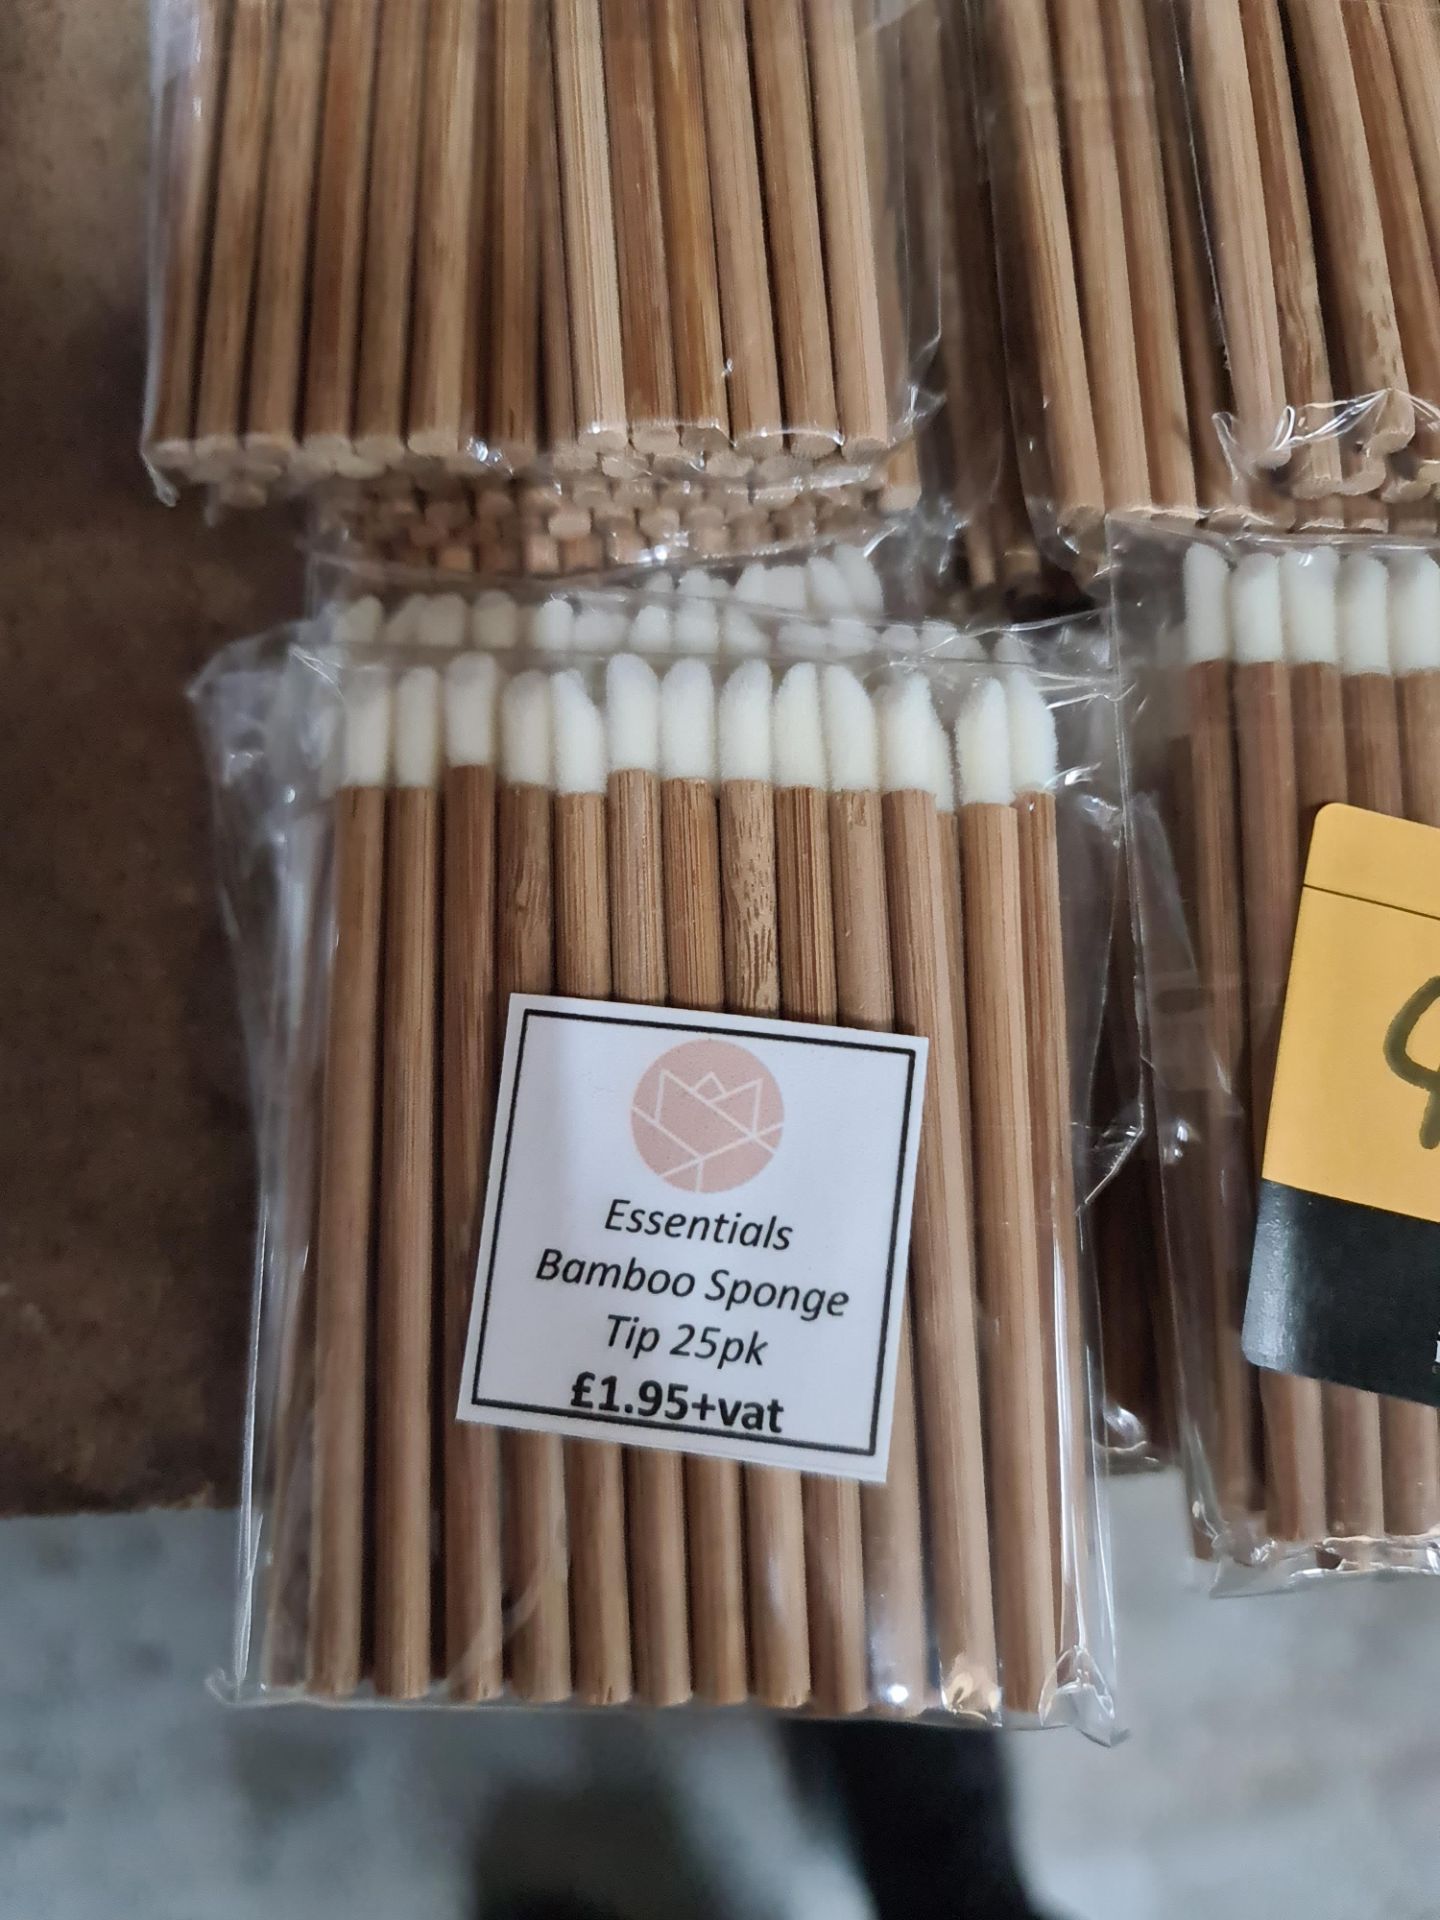 24 packs of Essentials bamboo sponge tips